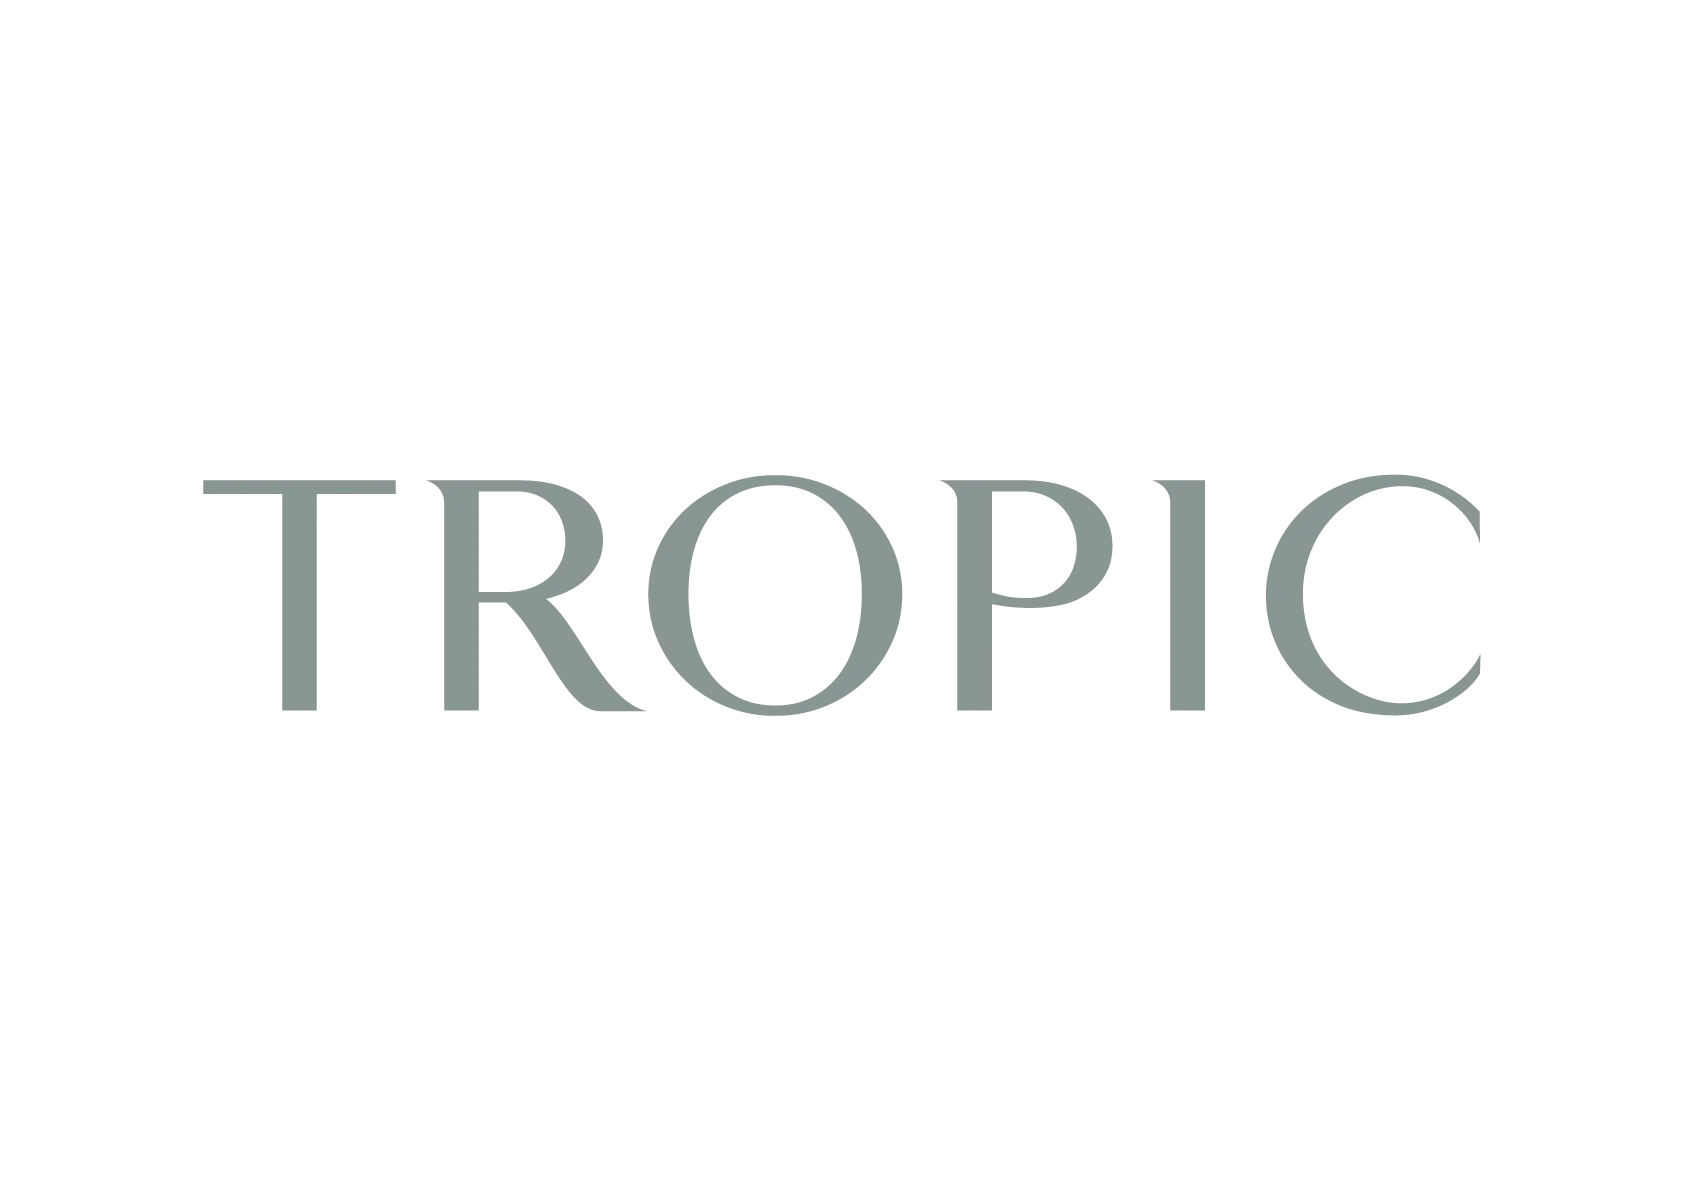 Tropic Skincare